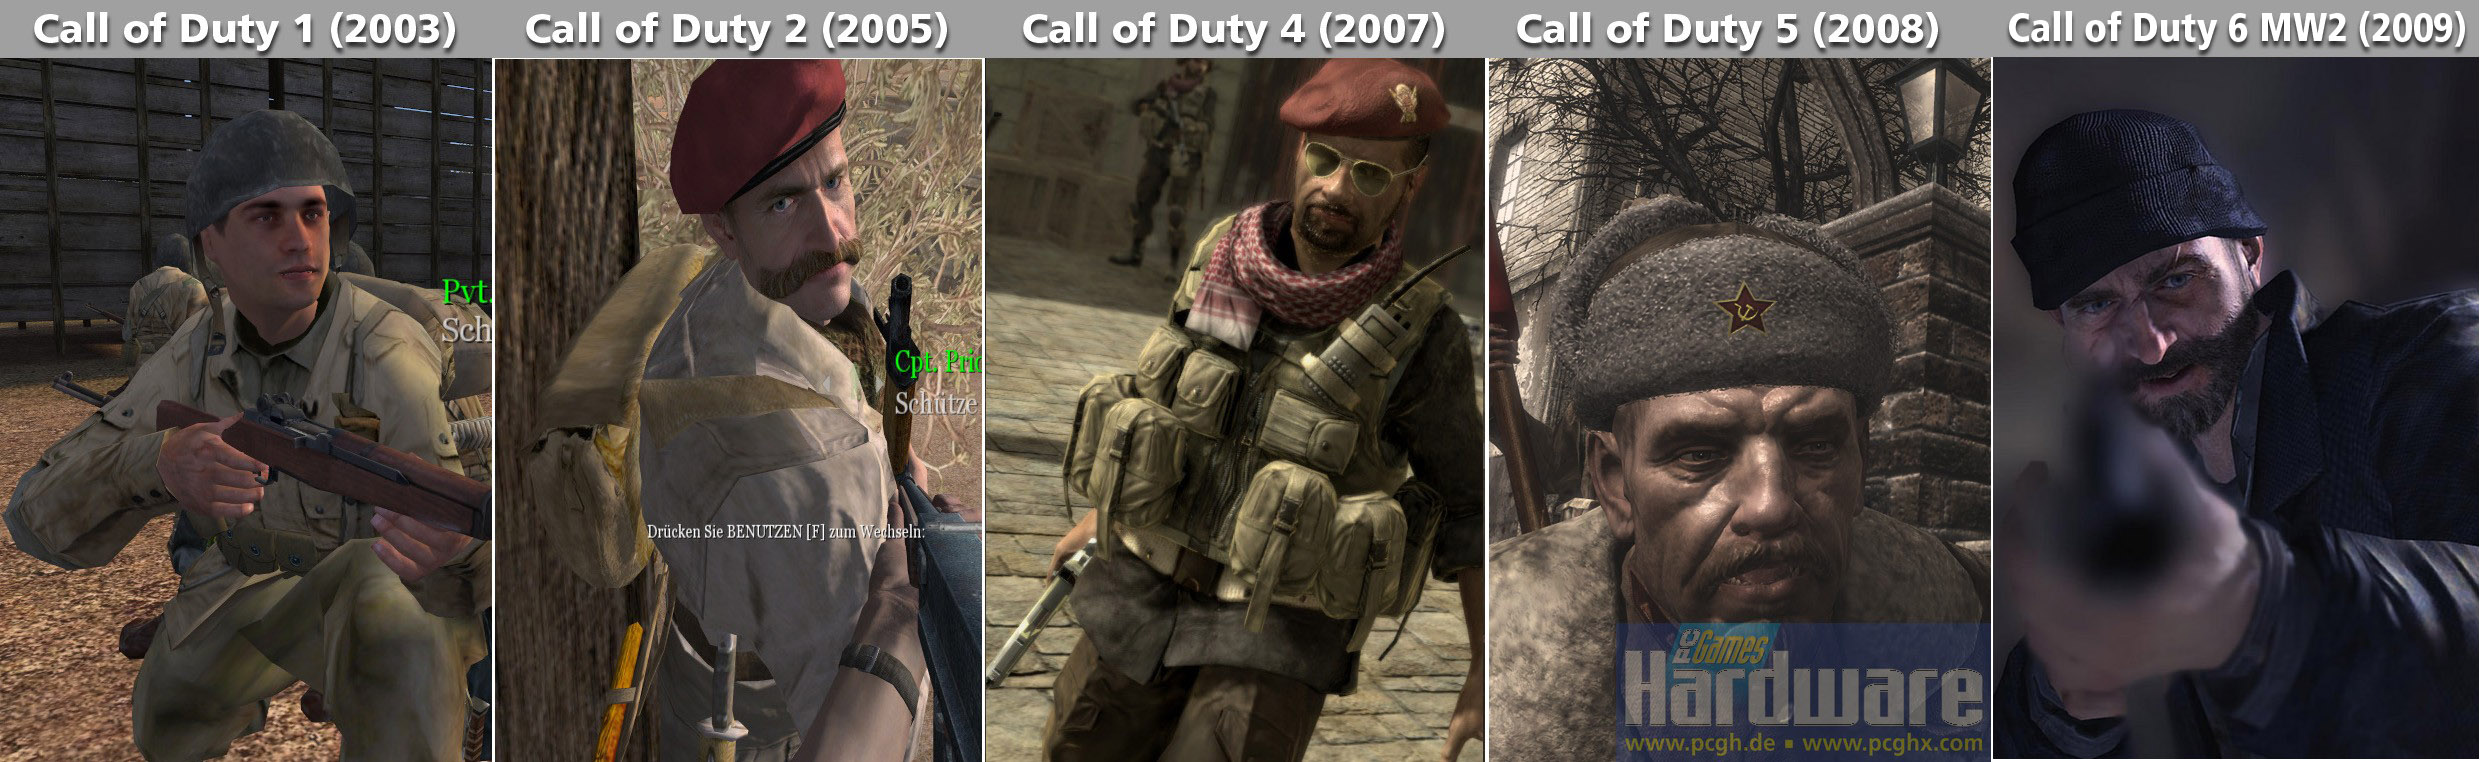 Call_of_Duty_History-1.jpg